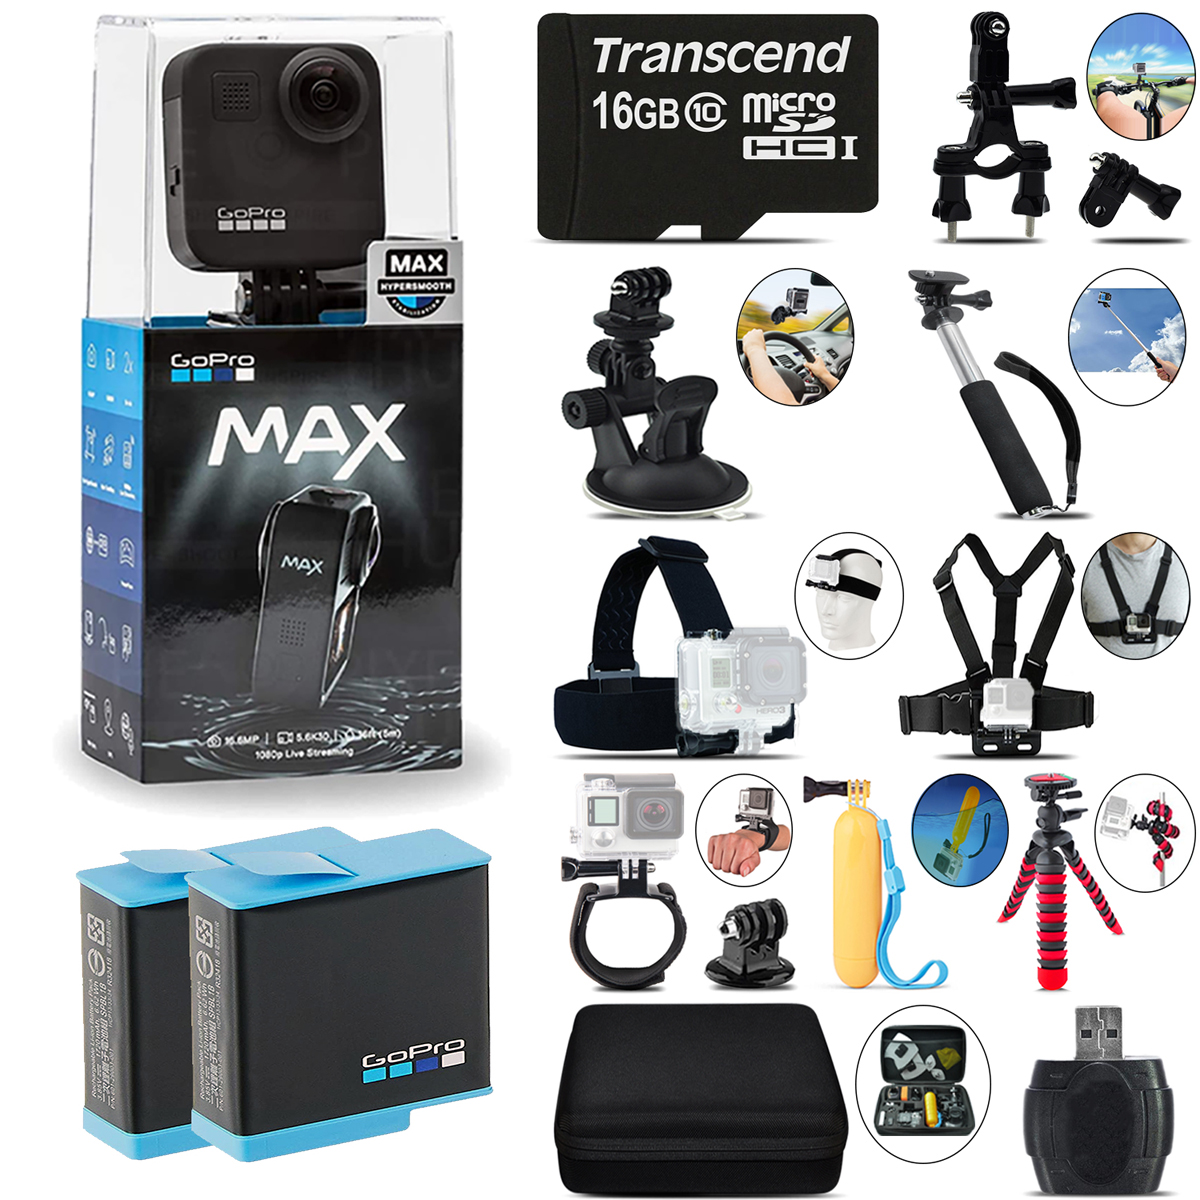 MAX 360 Action Camera + Extra Battery & Much More! - Mega Kit *FREE SHIPPING*